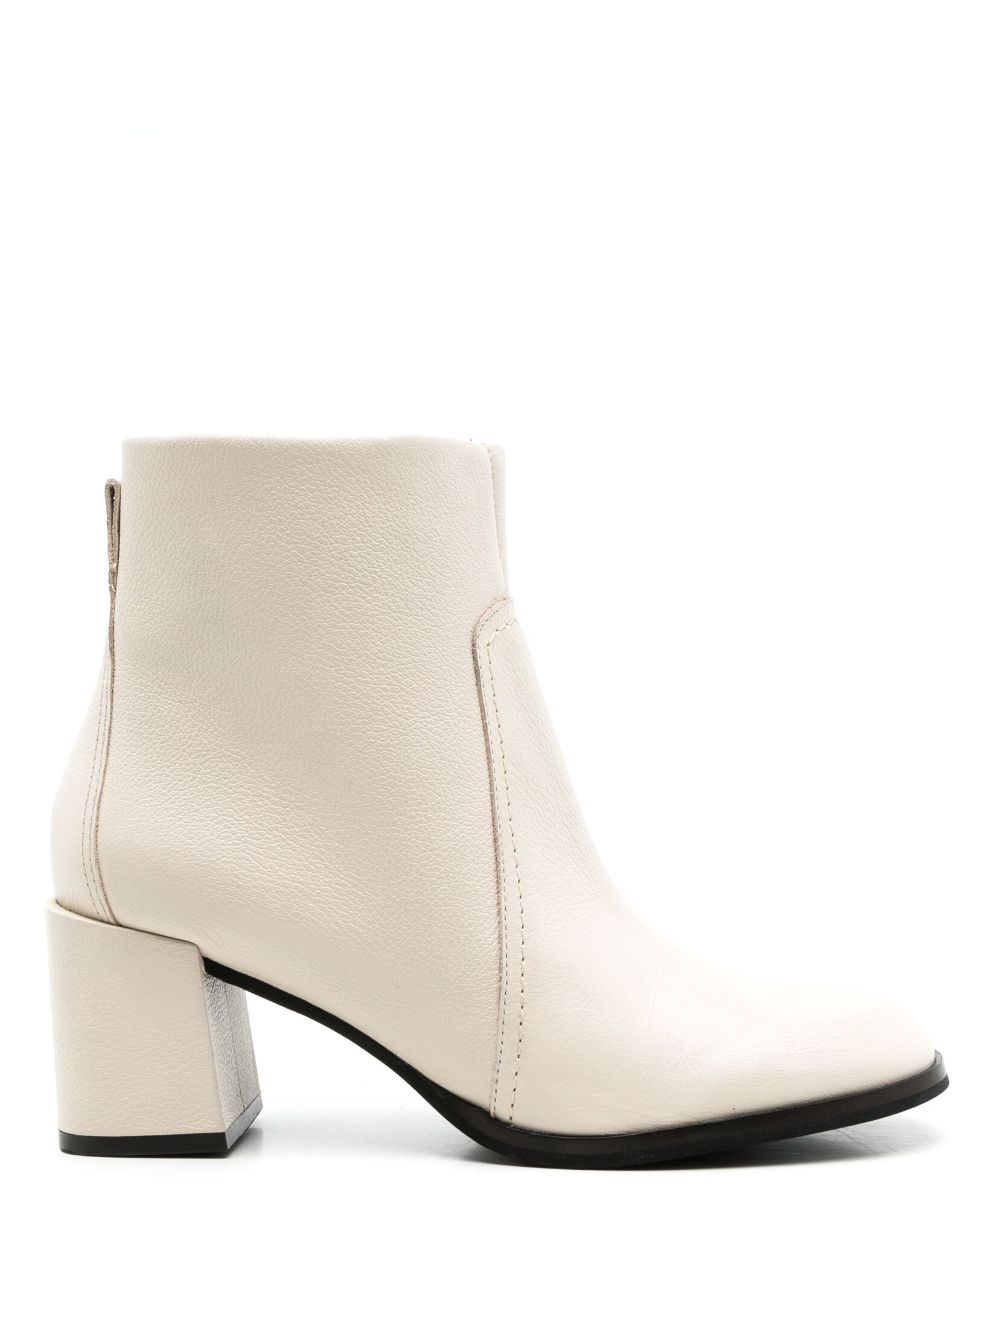 Sarah Chofakian Mariette leather ankle boots - White von Sarah Chofakian